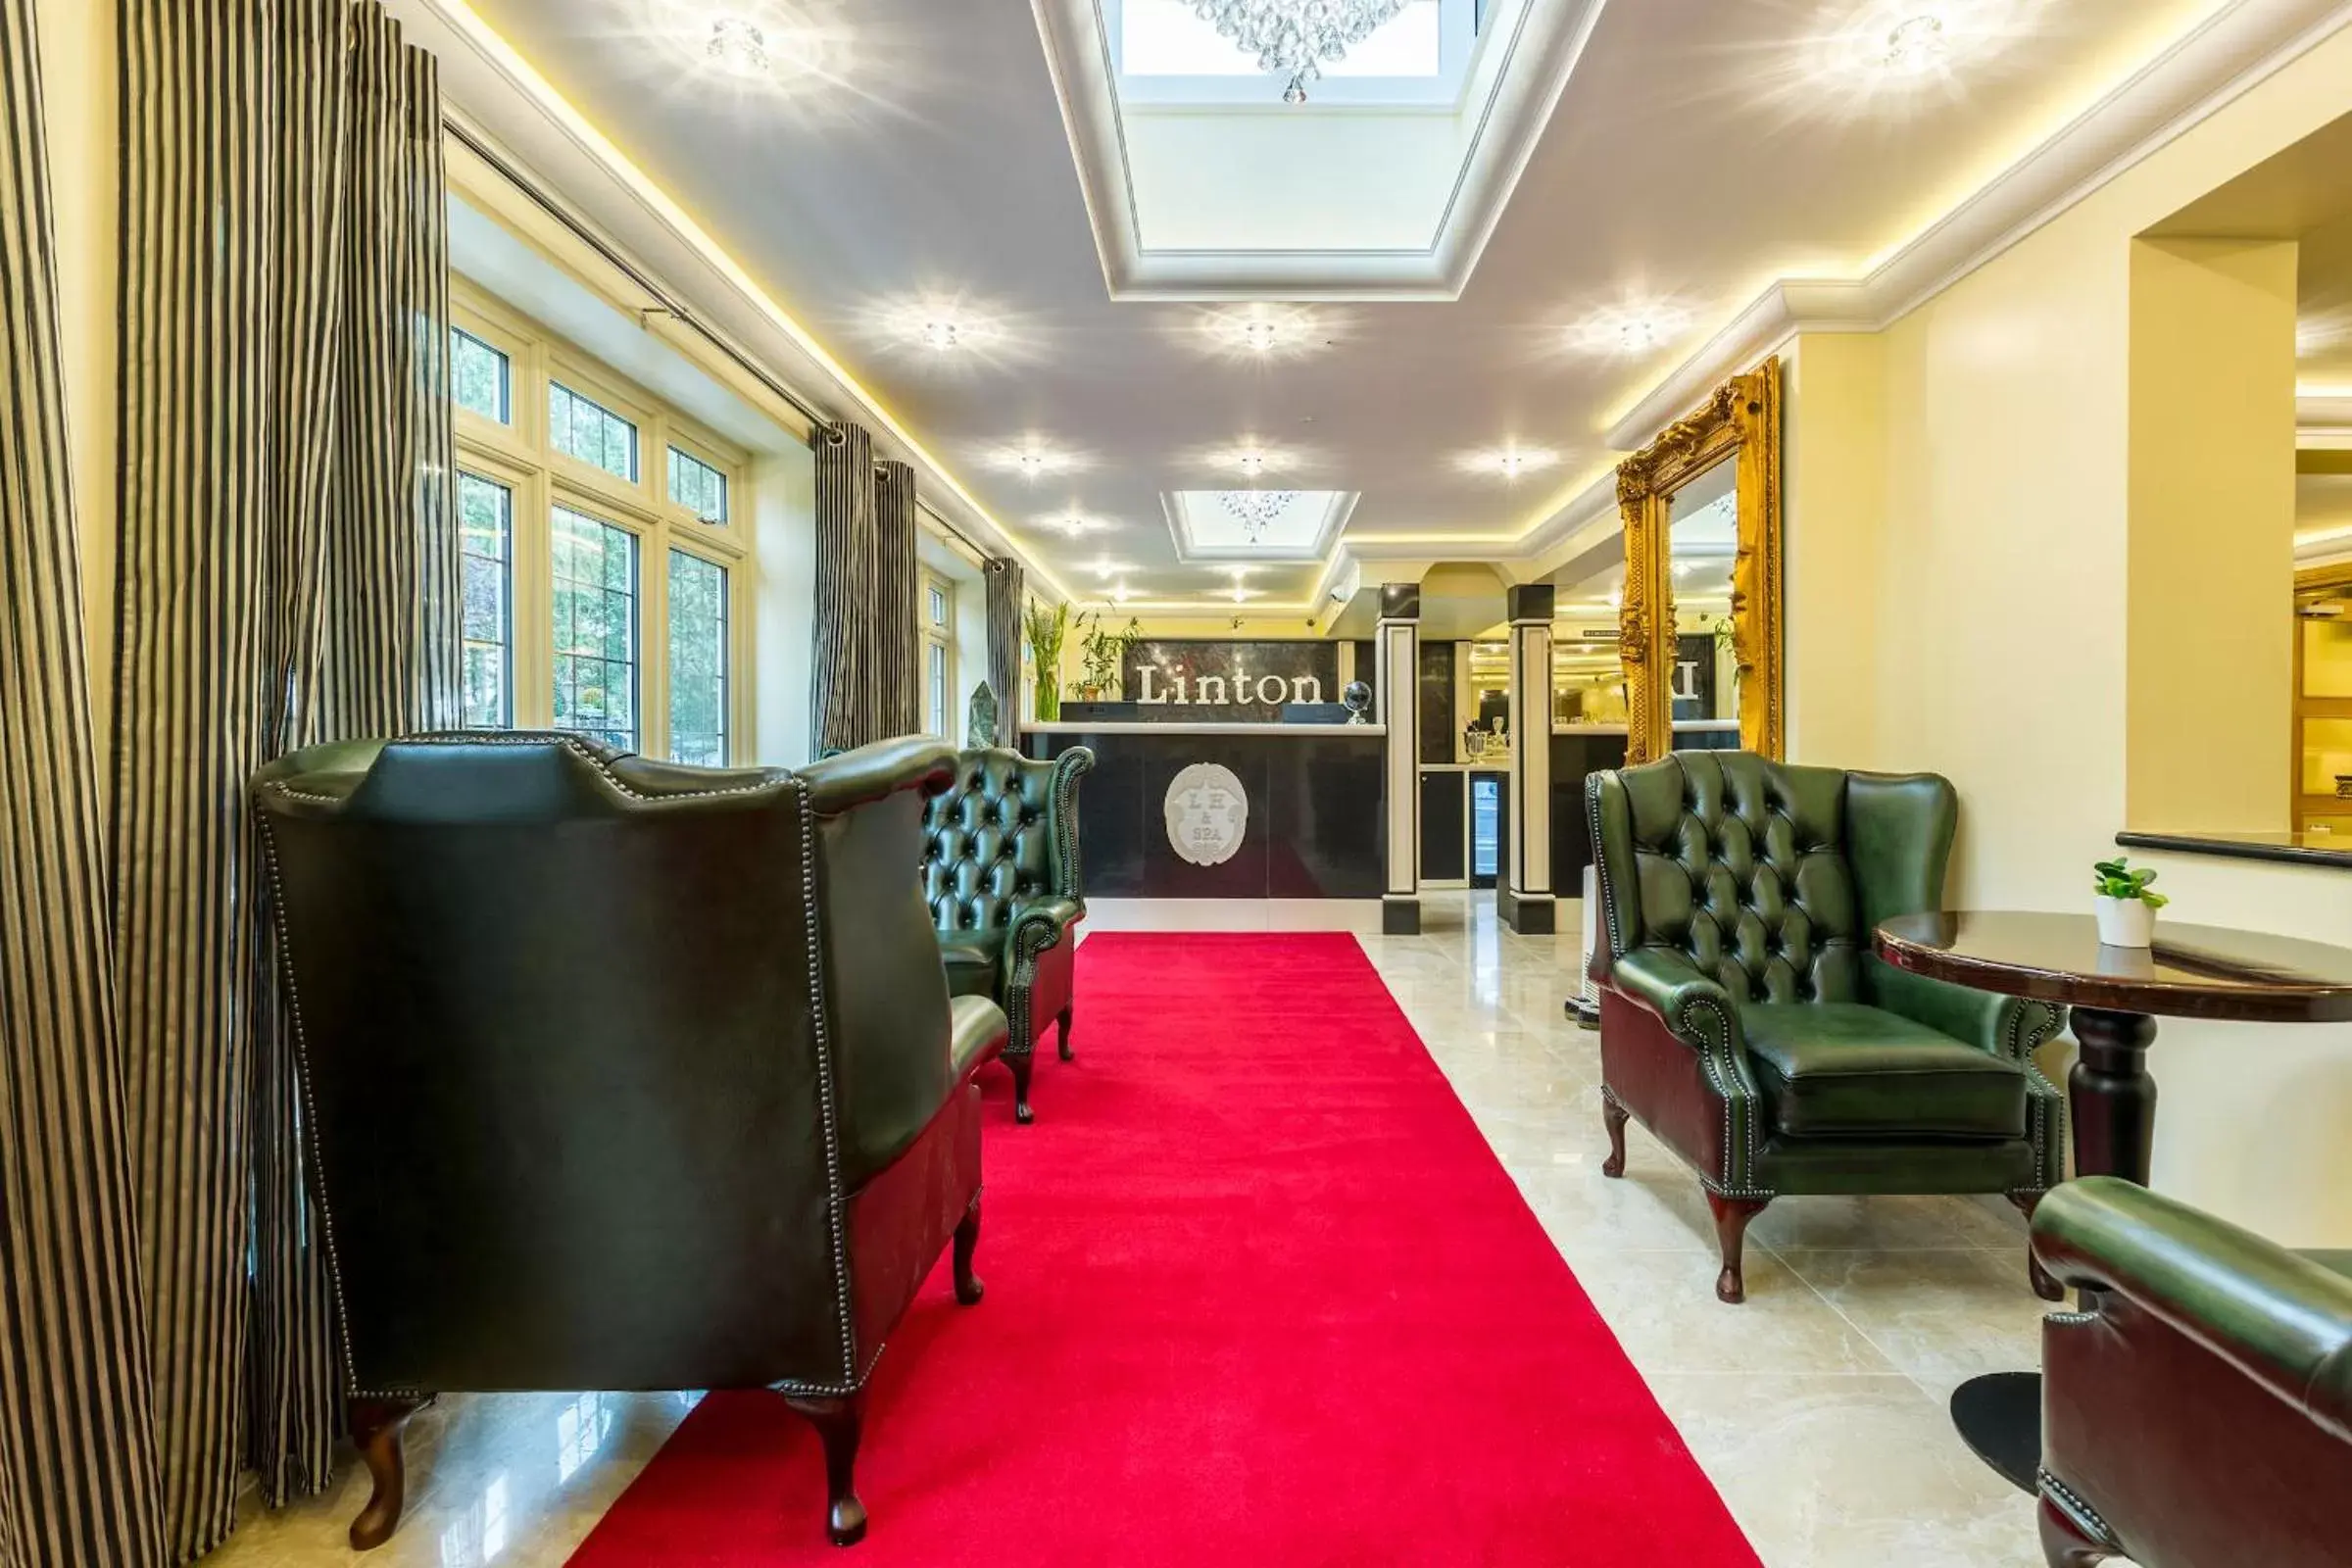 Lobby or reception in Linton Hotel Luton